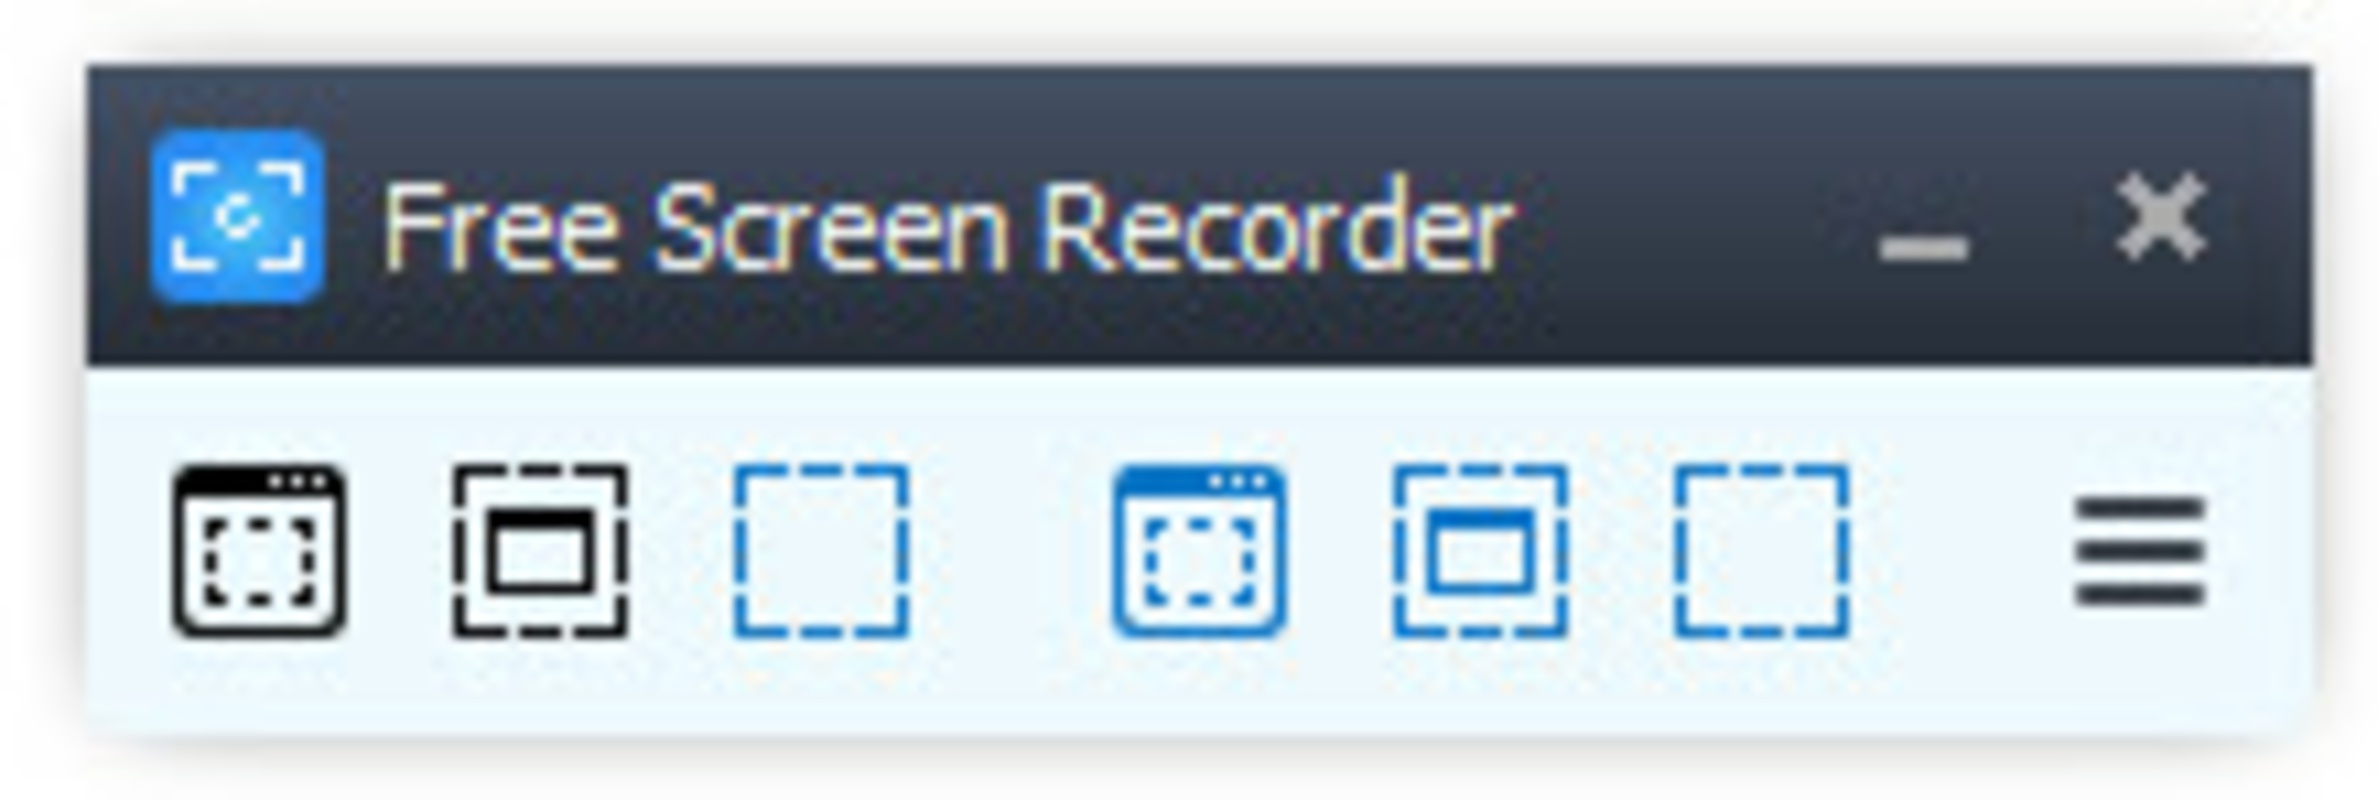 screen video recorder windows 10 free download